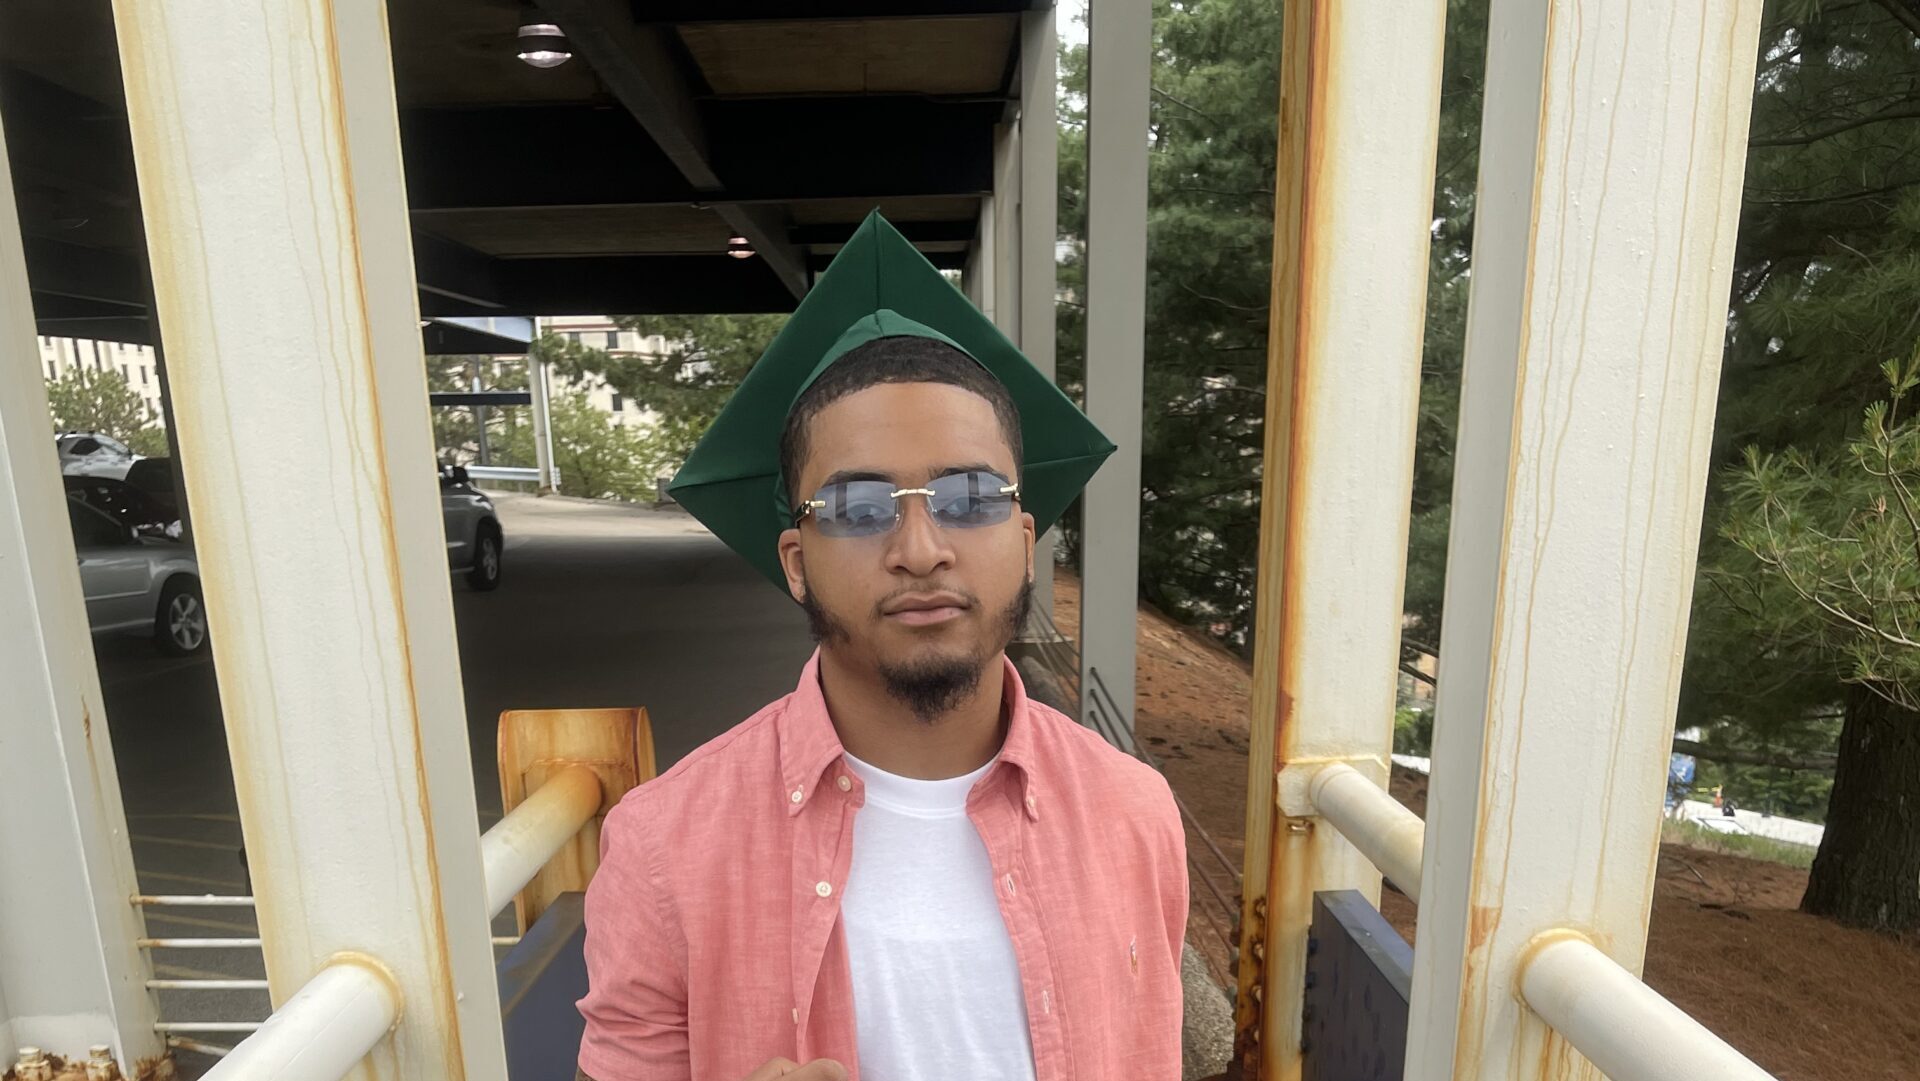 Kivon posing in his graduation cap with his diploma